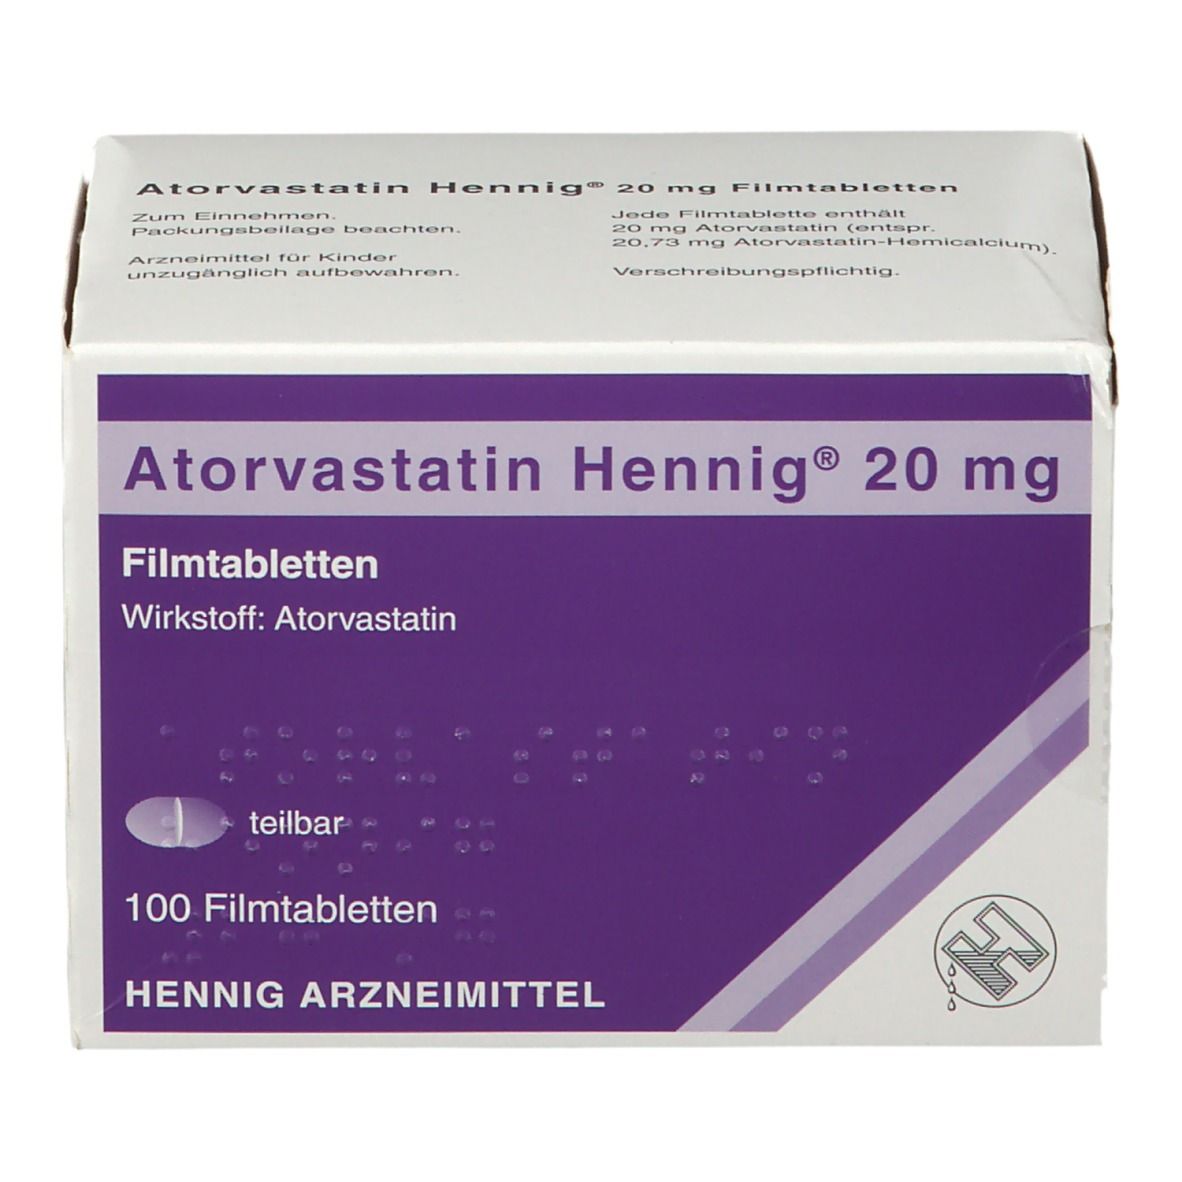 Atorvastatin Hennig® 20 mg